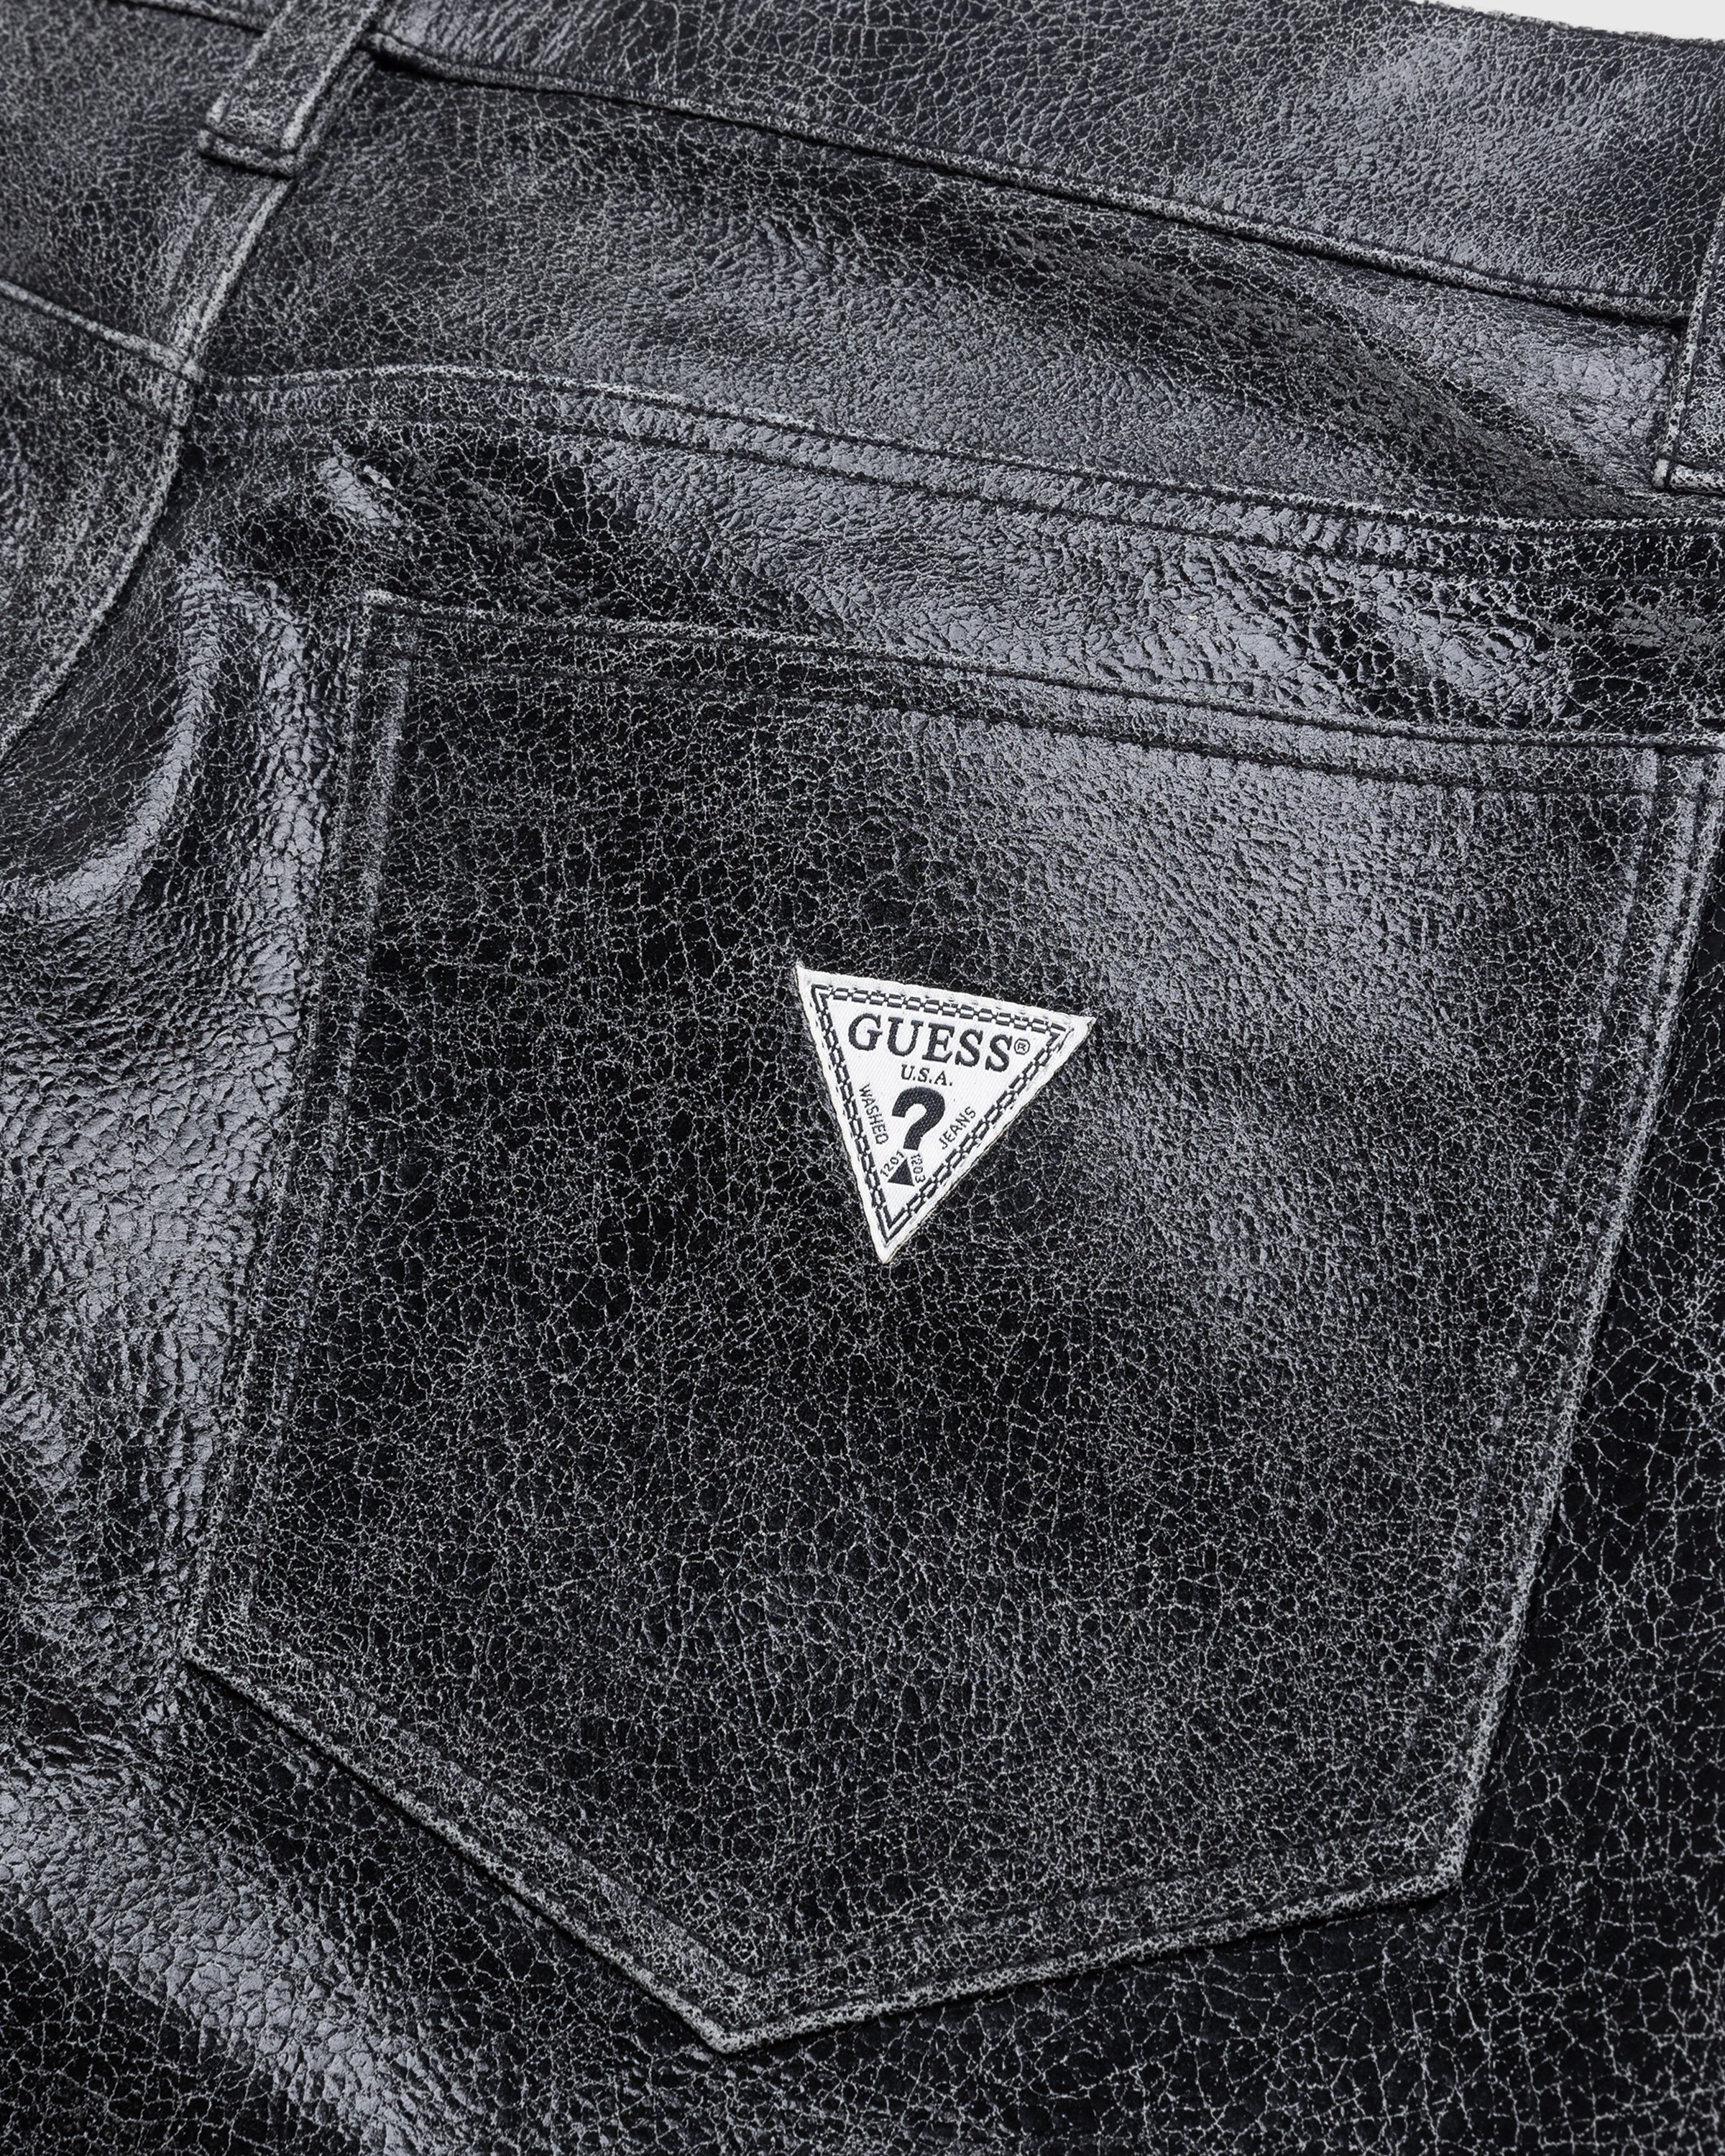 Guess USA - Crackle Leather Flare Pant Jet Black - Clothing - Black - Image 5